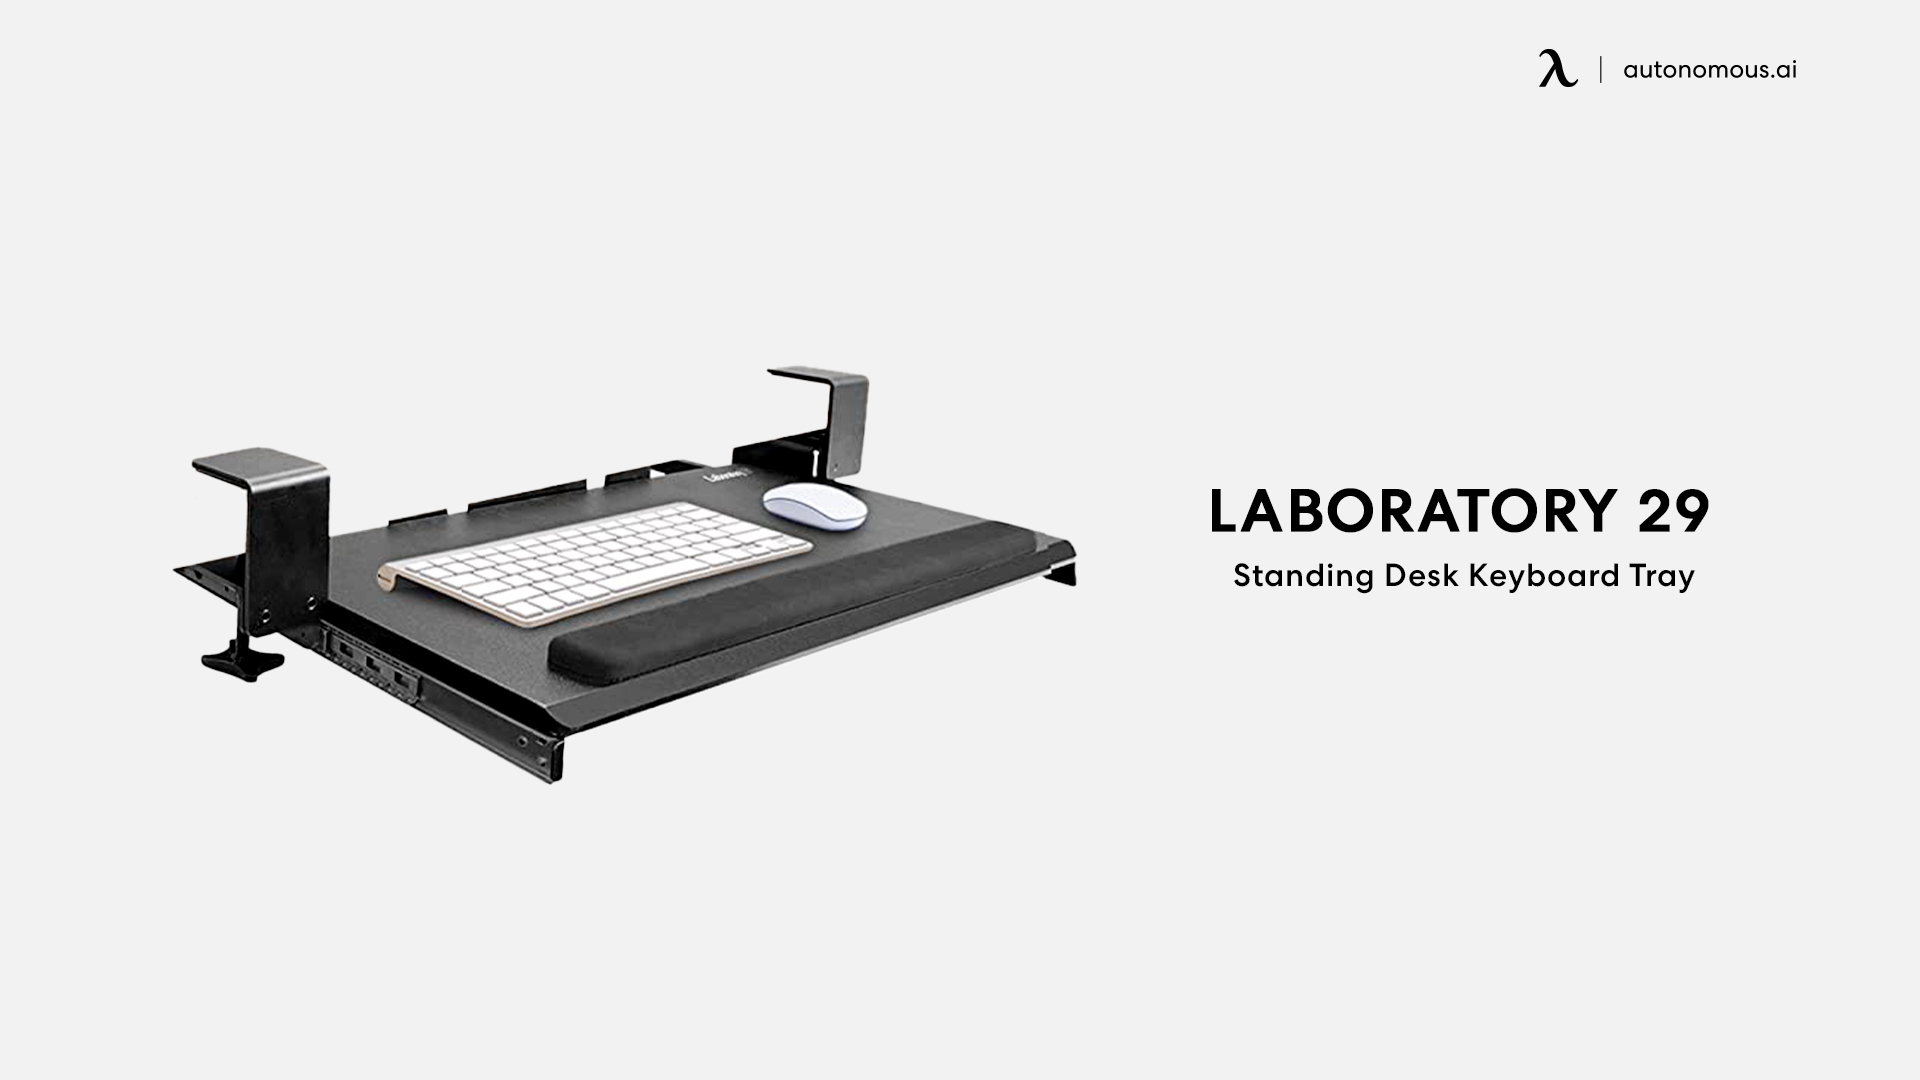 Standing Desk Keyboard Tray by Laboratory 29